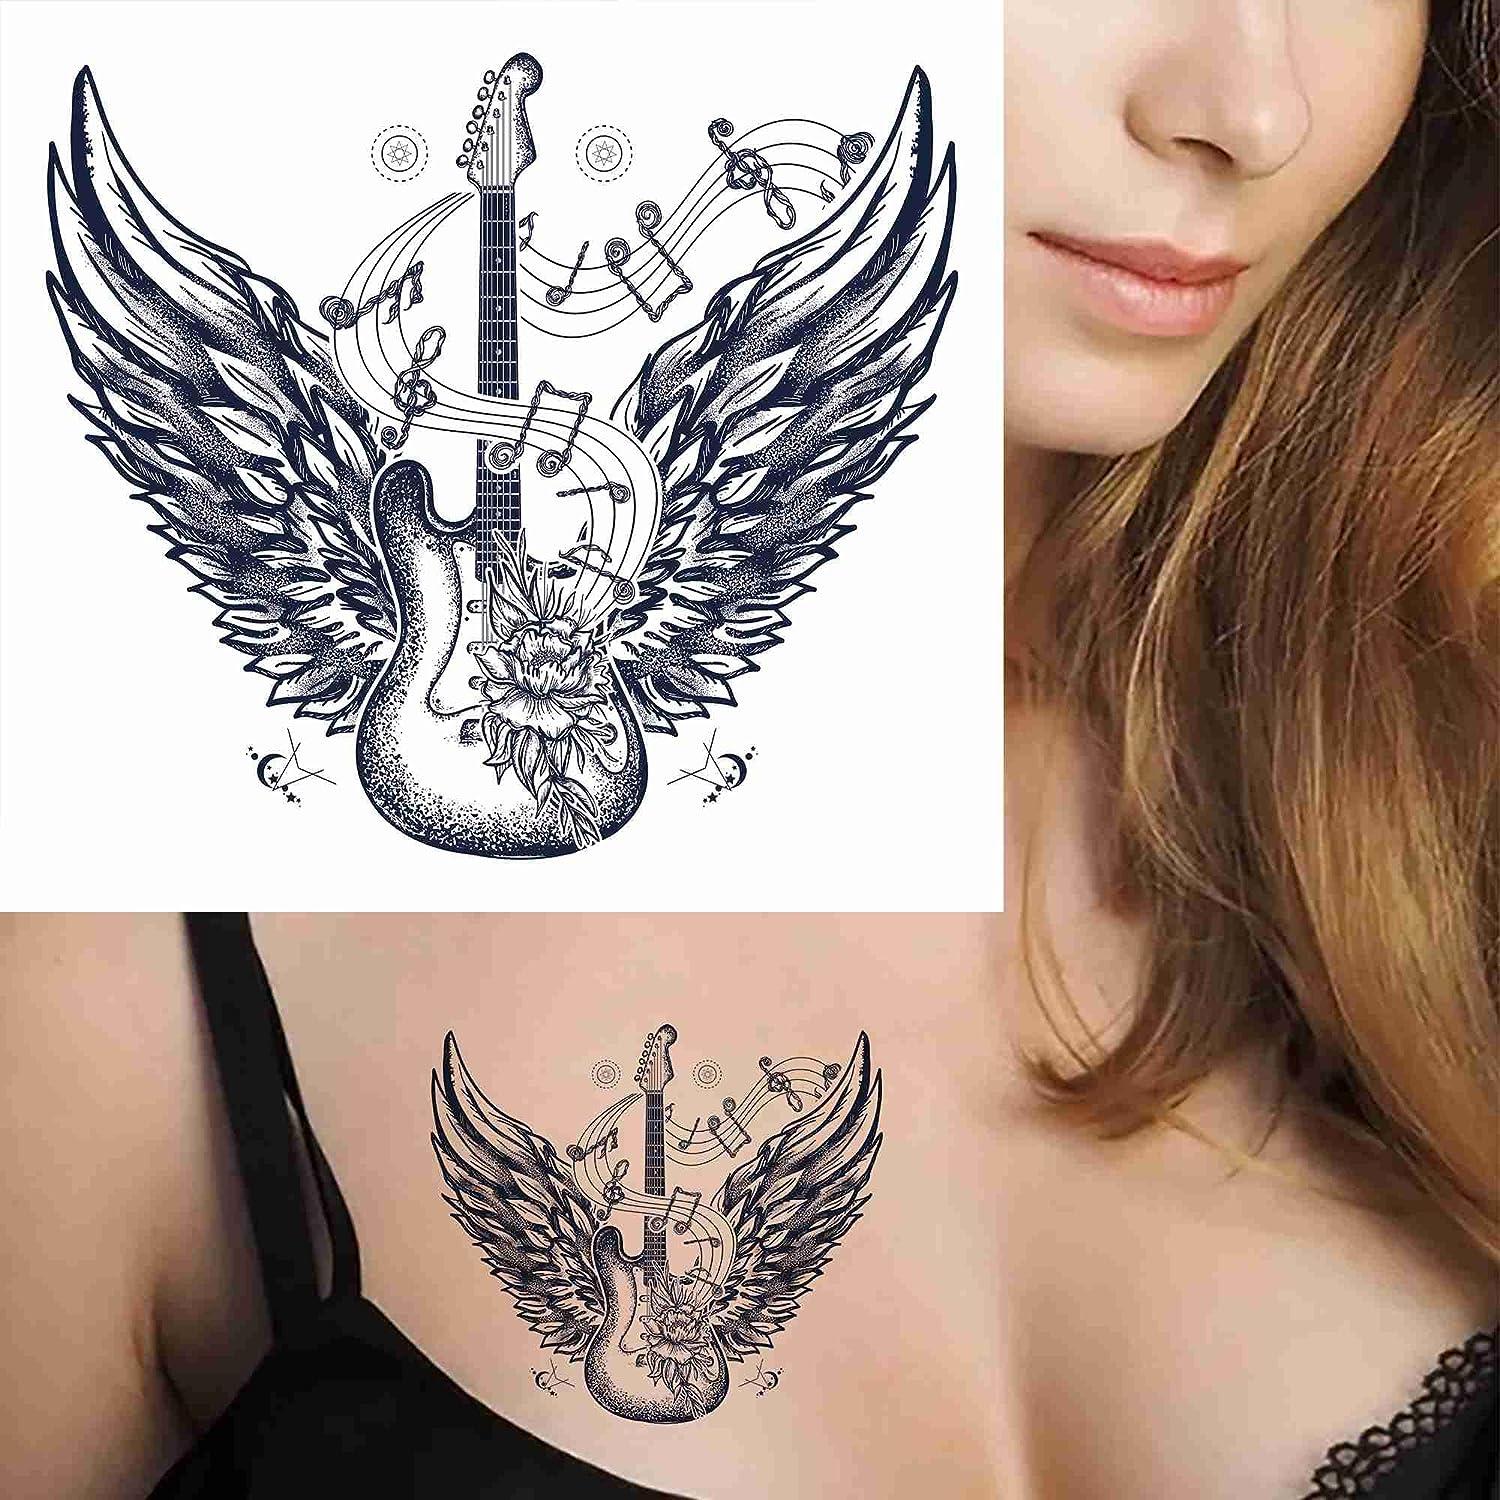 Angel wings tattoo Royalty Free Vector Image - VectorStock